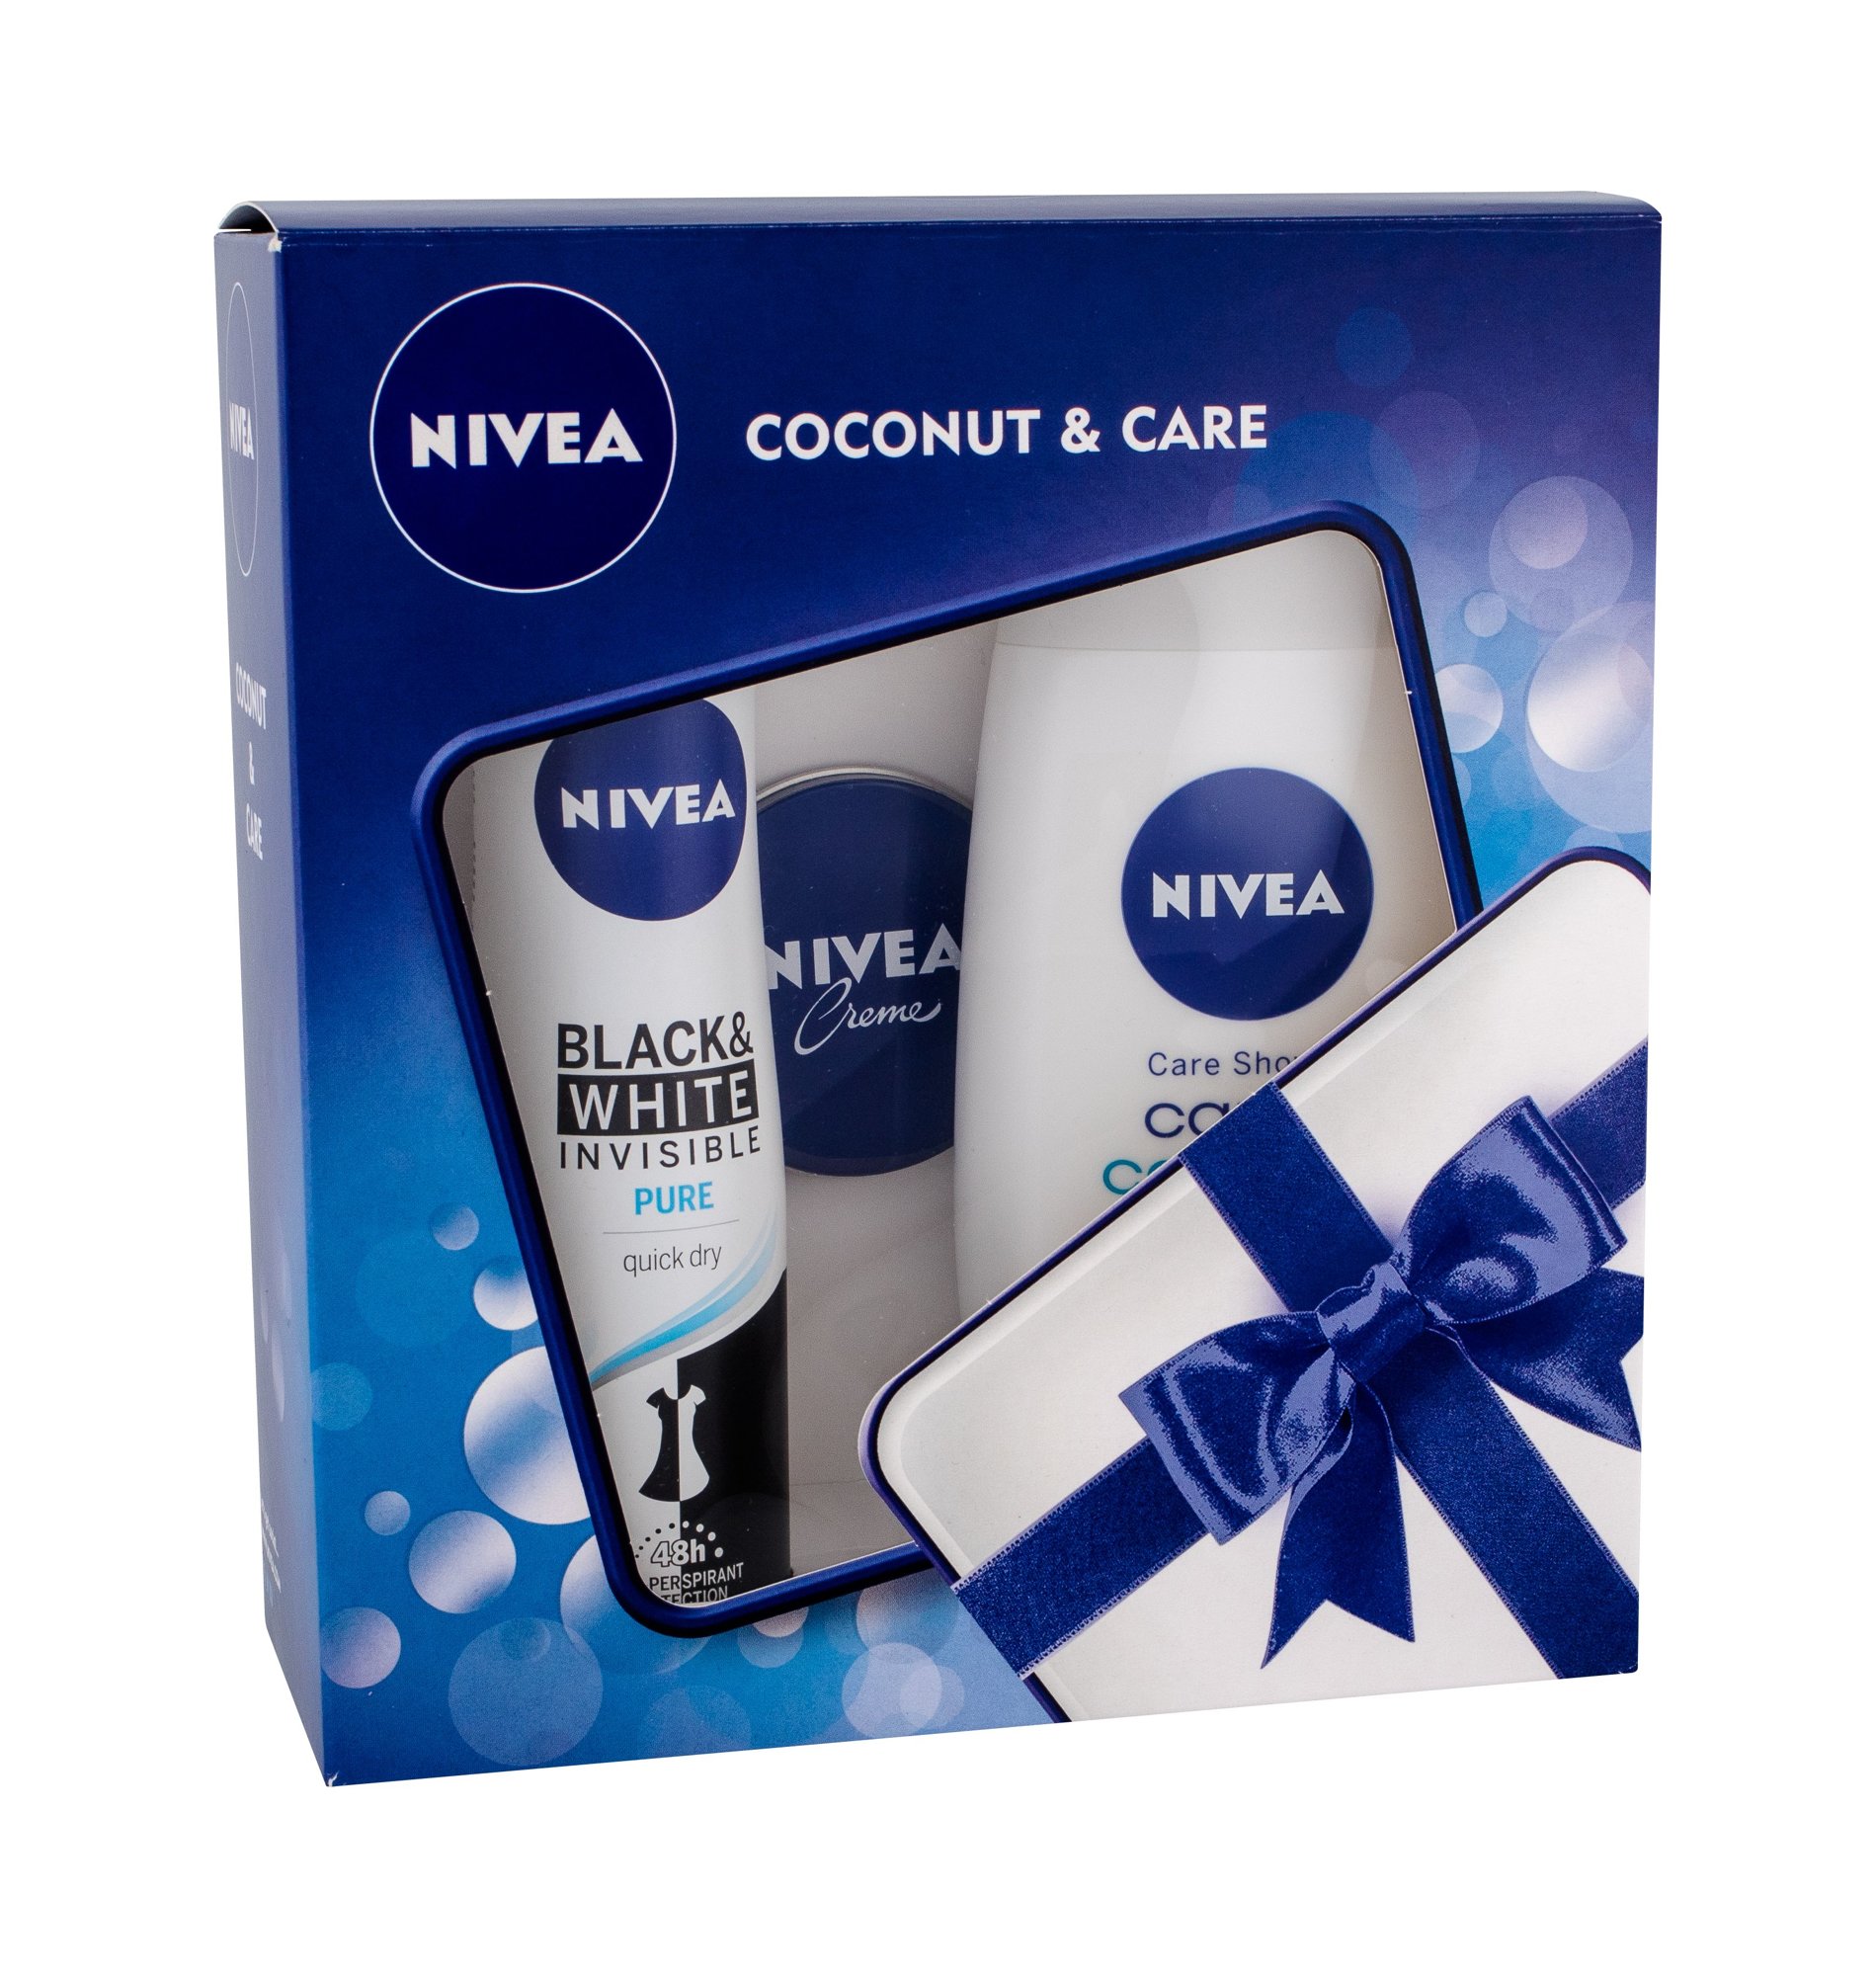 Nivea Care & Coconut 250ml 250ml Creme Coconut Cream Shower + 150ml Anti-Perspirant Invisible For Black & White Pure + 30ml Creme dušo kremas Rinkinys